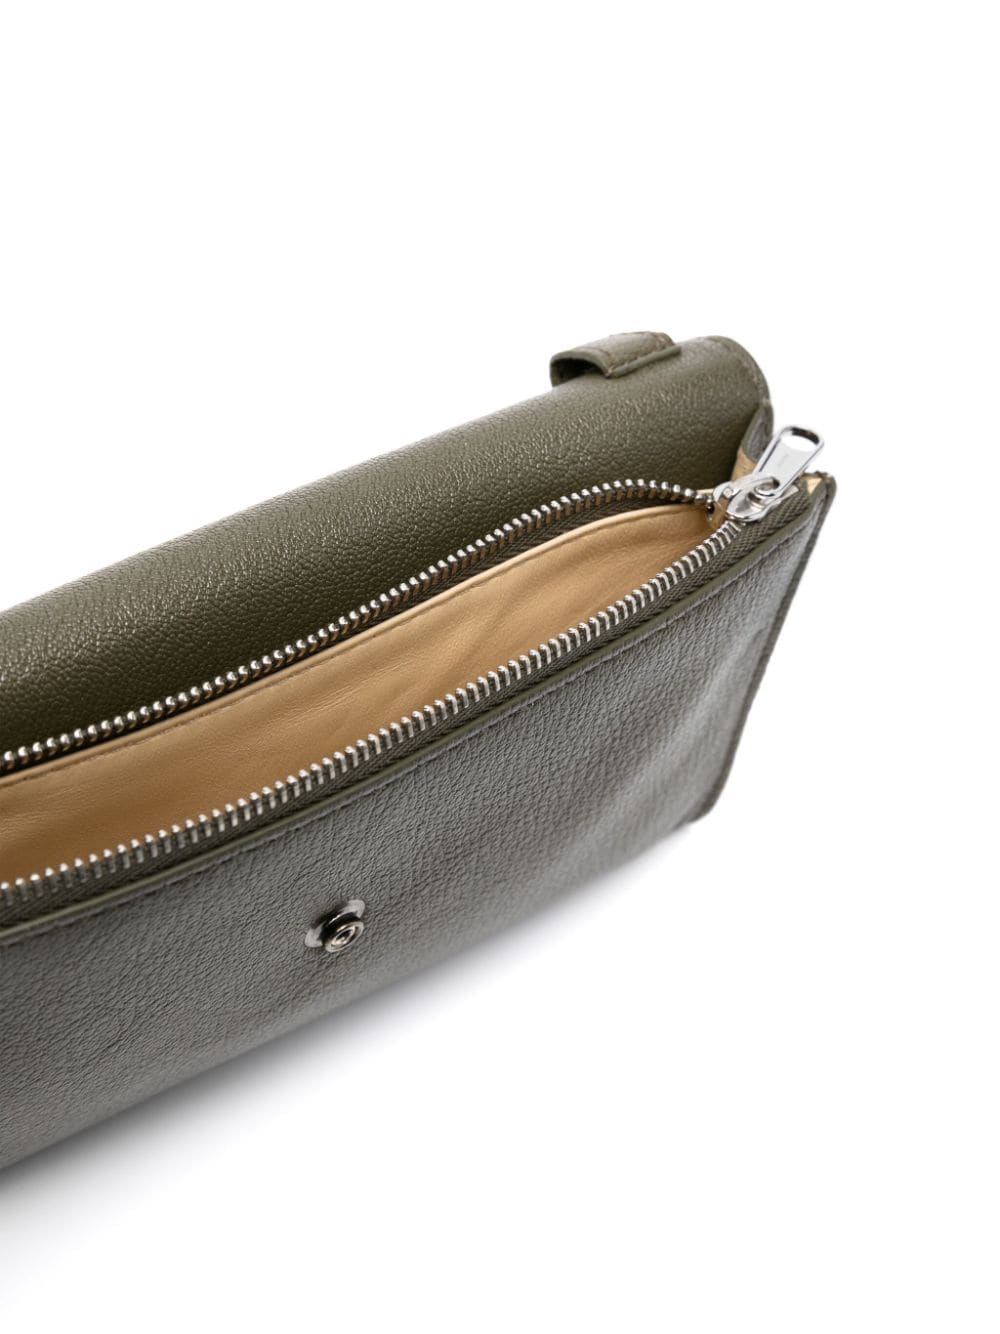 Enveloppe Bag in Leather, HealthdesignShops